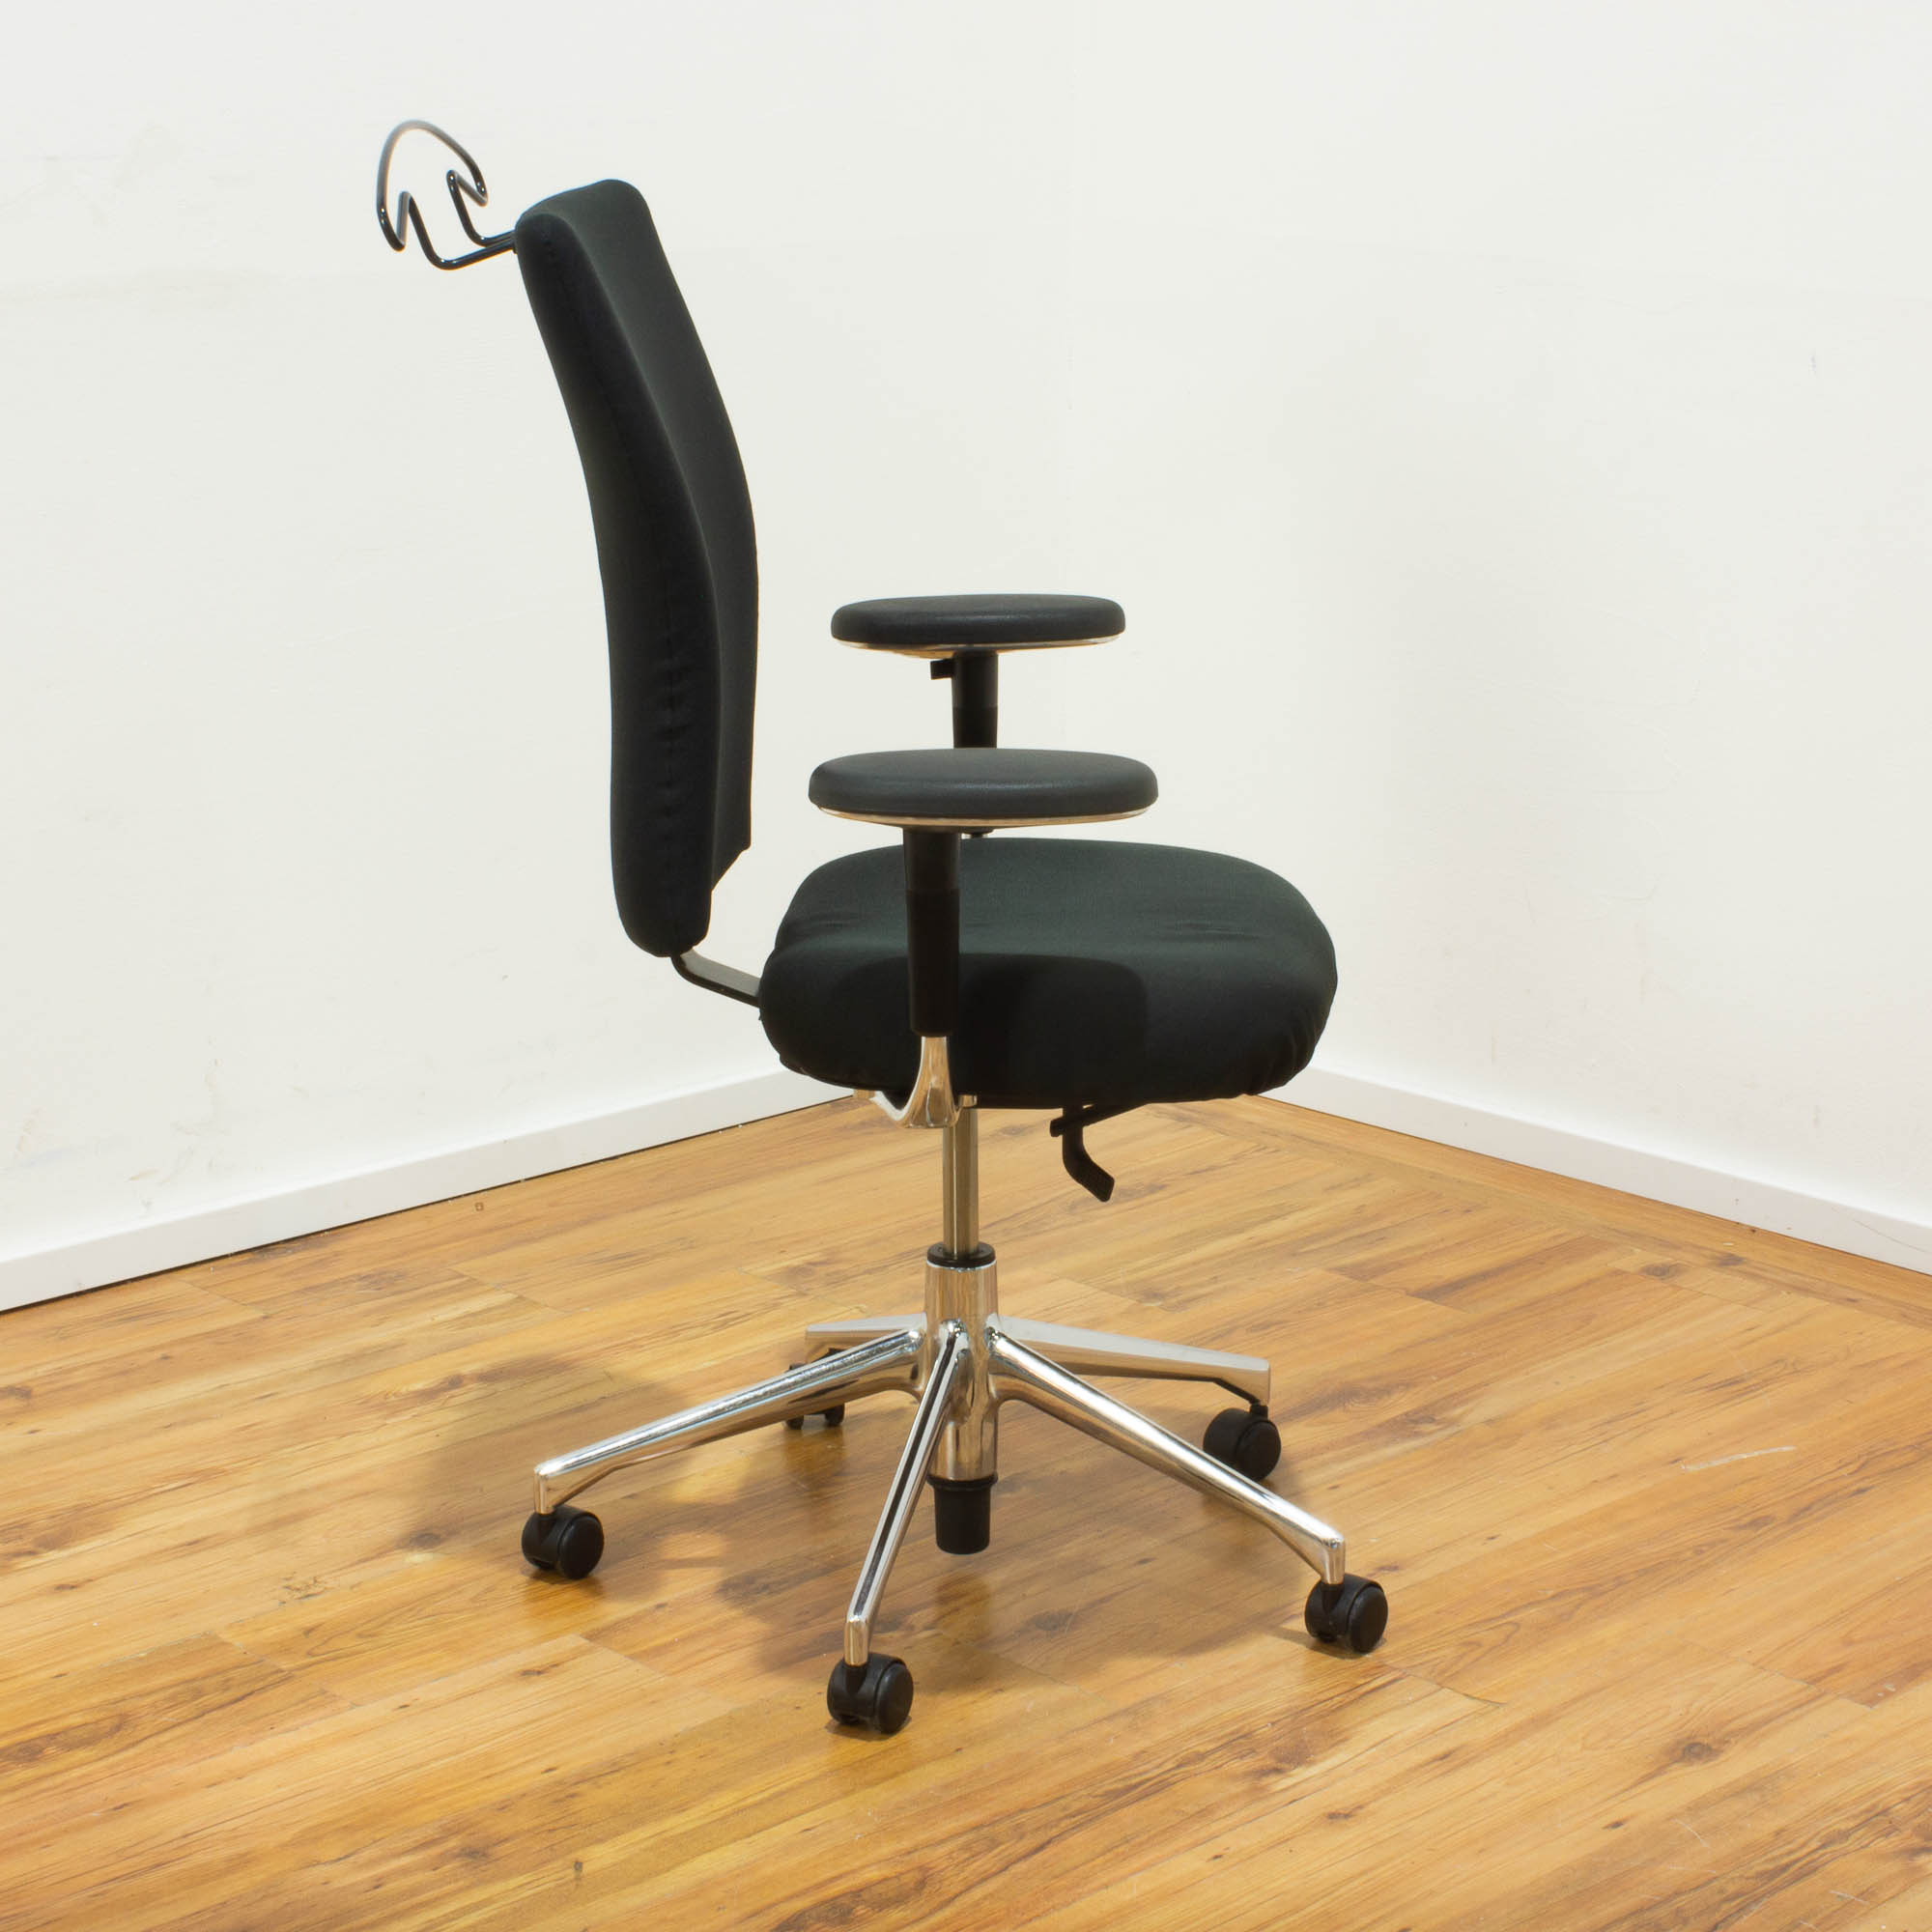 Vitra T-Chair - Bezug Stoff schwarz - 5-Sternfußgestell chrom